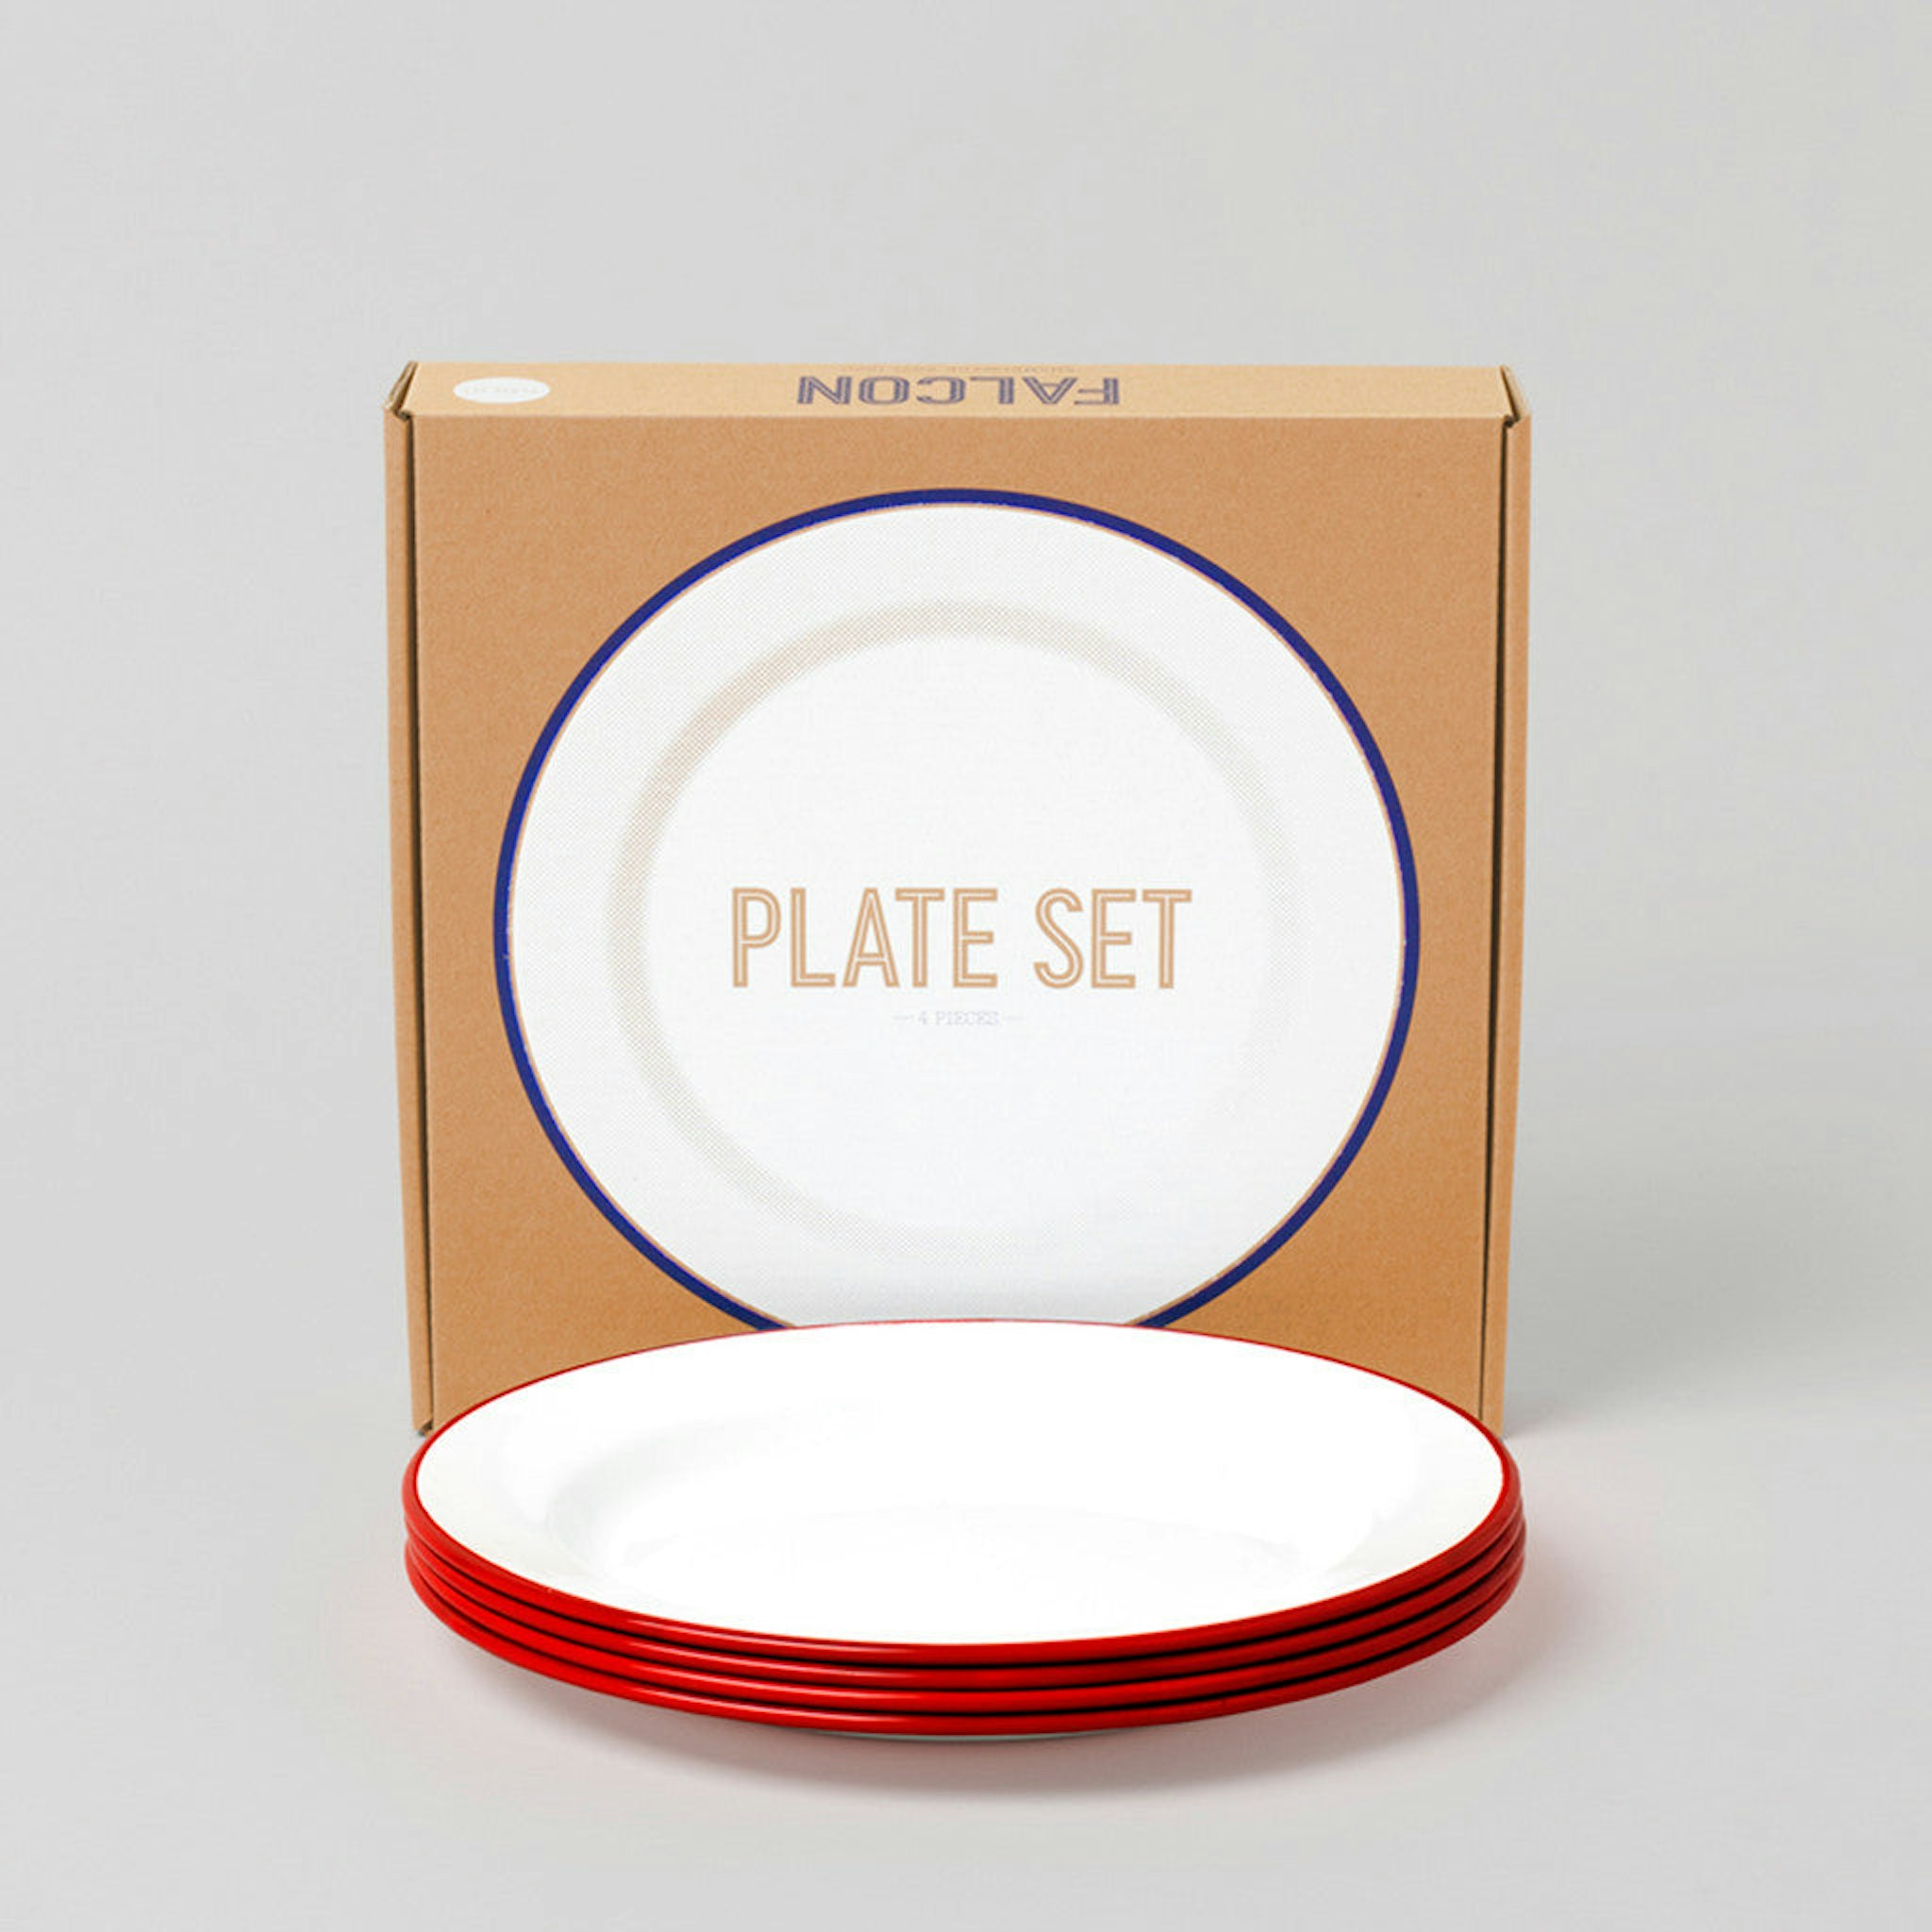 Plate set by Falcon Enamelware